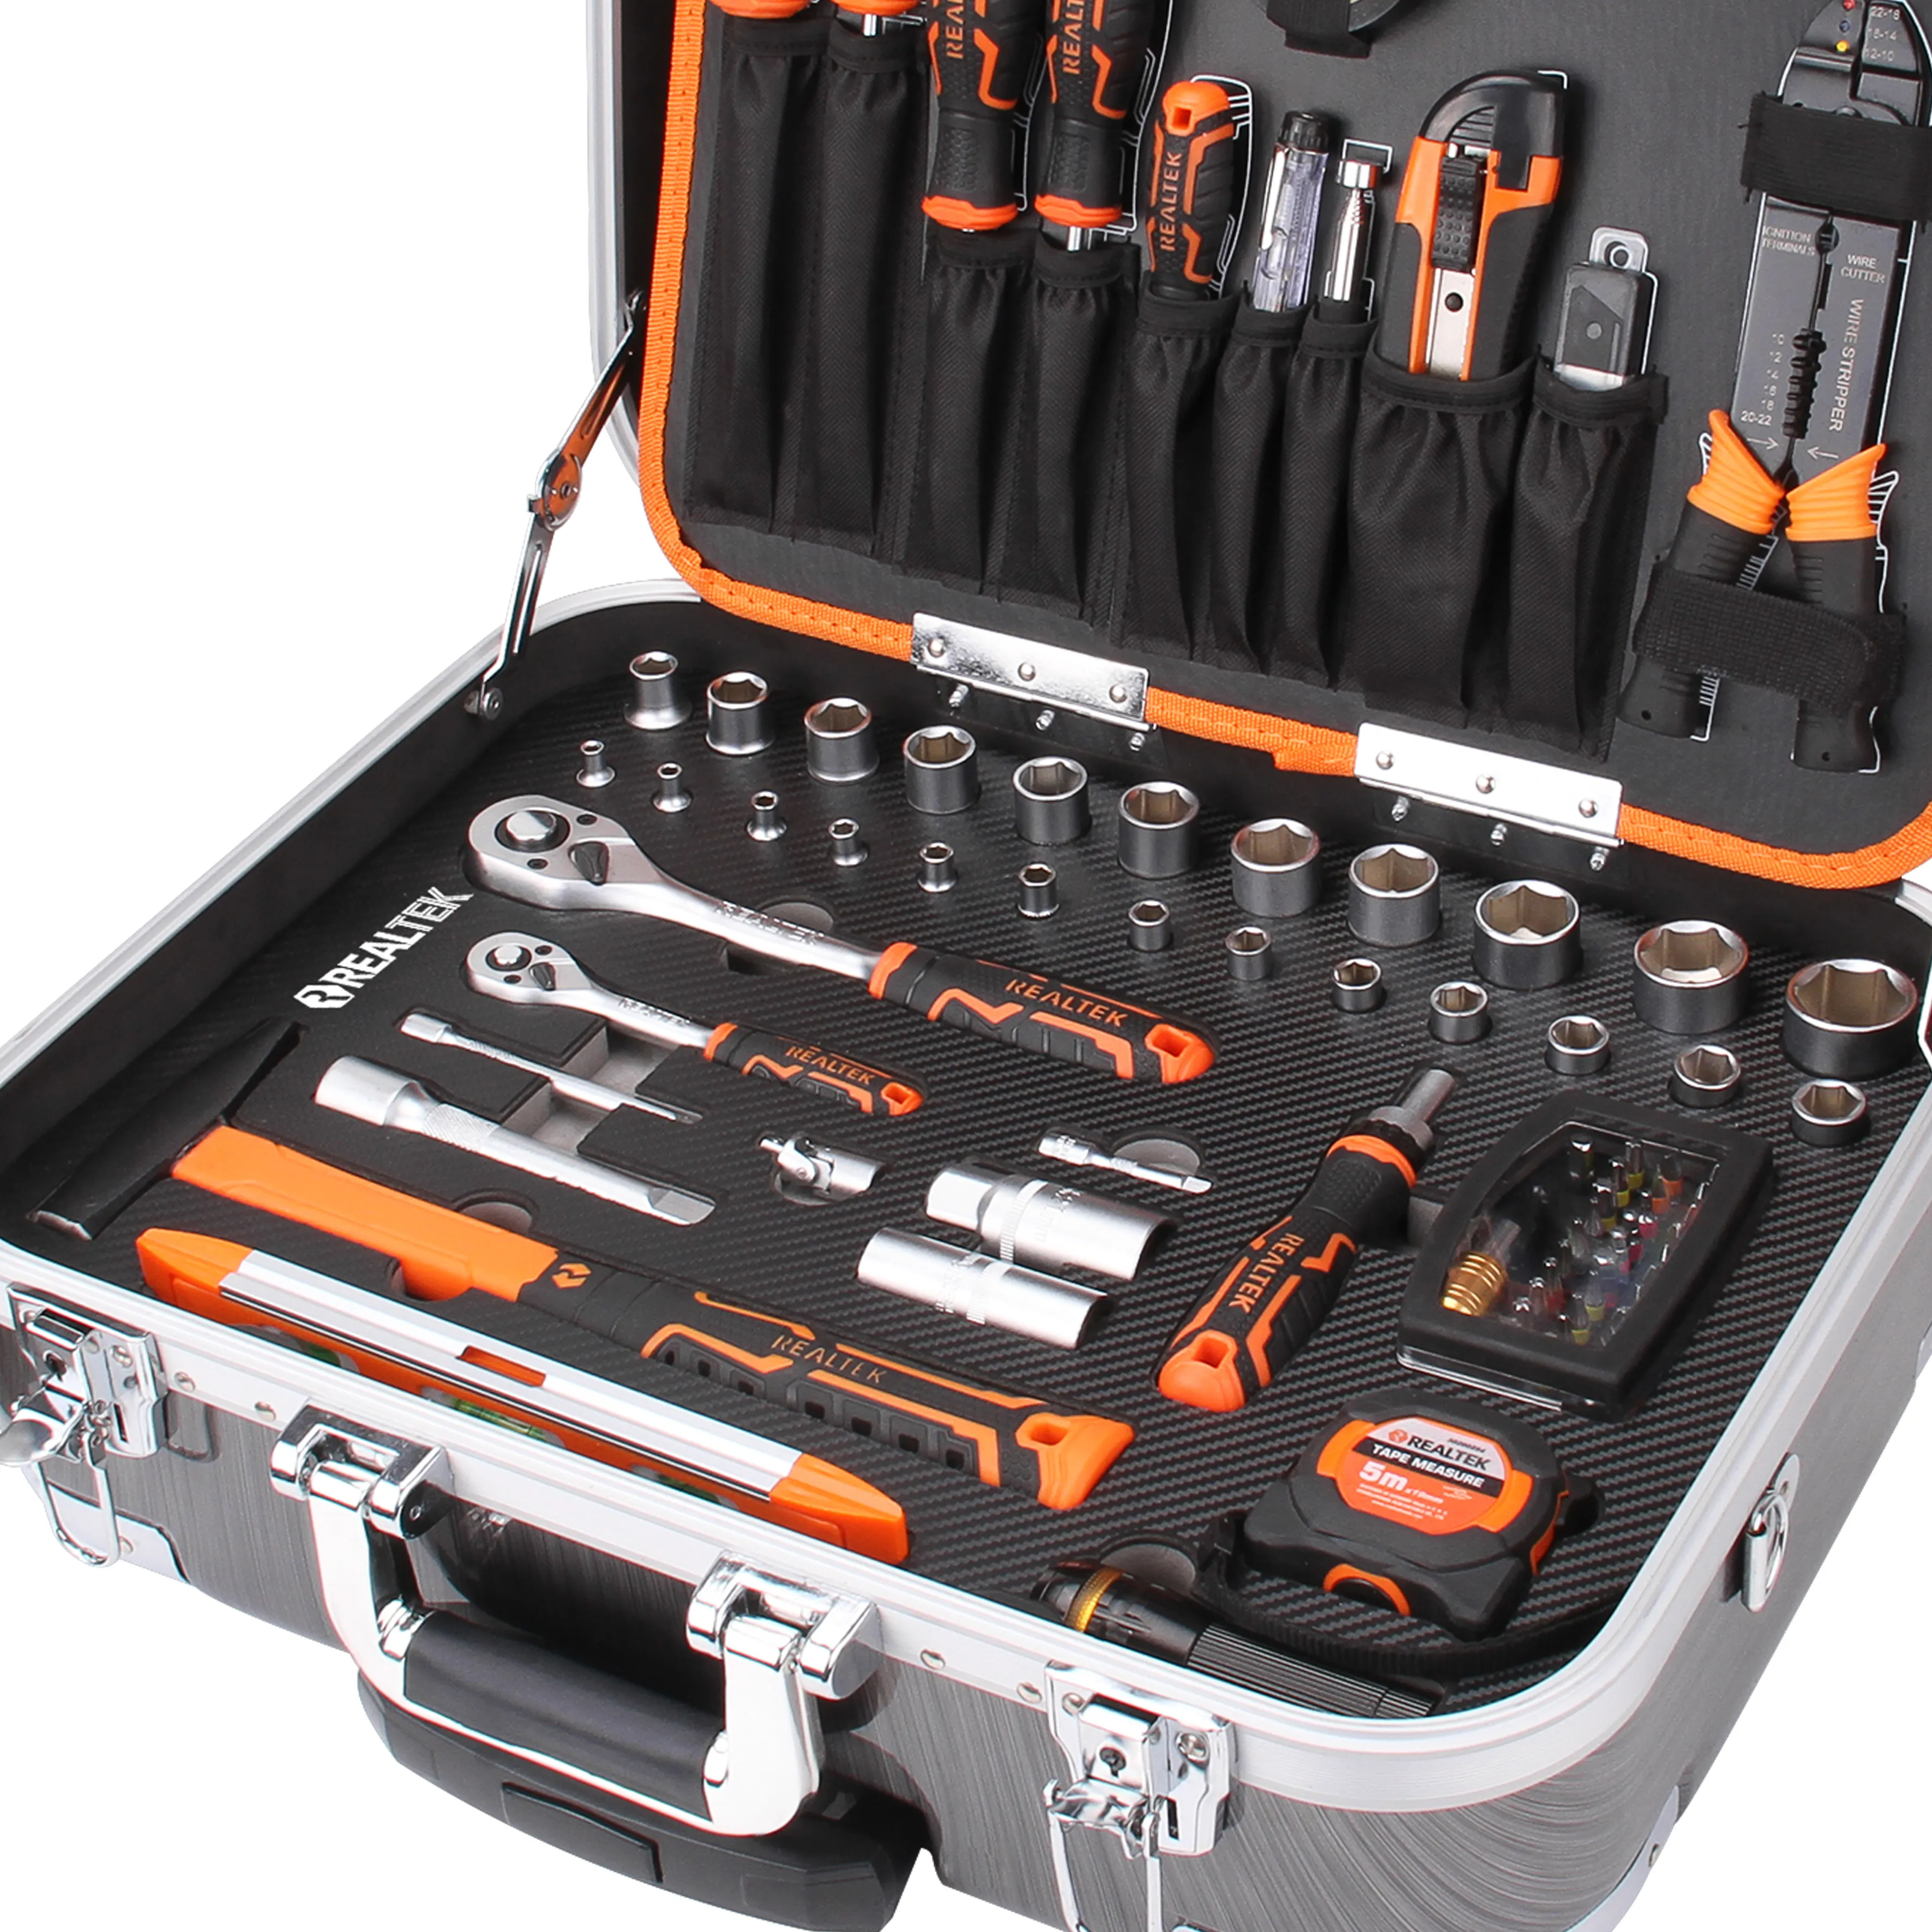 Realtek Hot Selling 123 Stück Kombination Handwerkzeuge in Aluminium gehäuse Home Tools